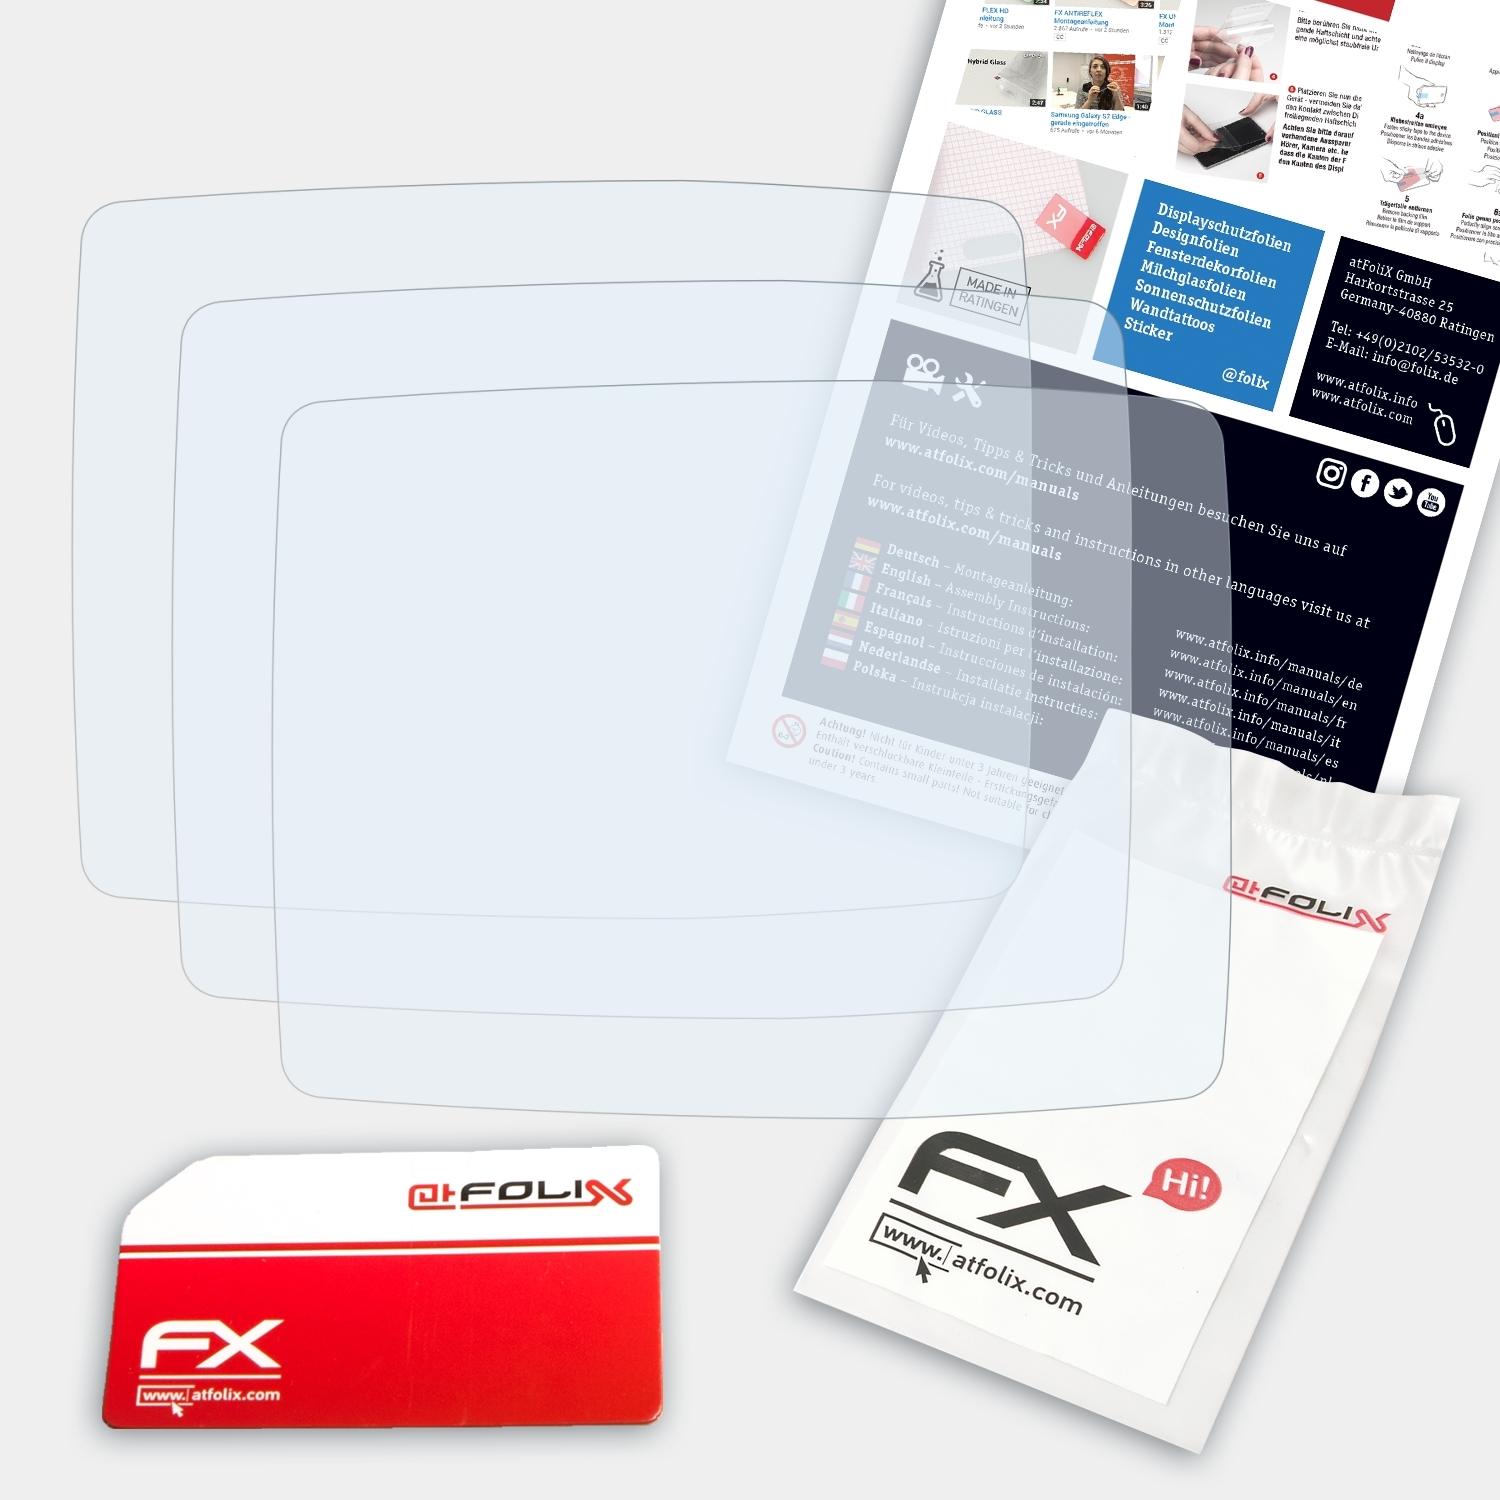 ATFOLIX 3x FX-Clear Displayschutz(für FinePix XP70) Fujifilm